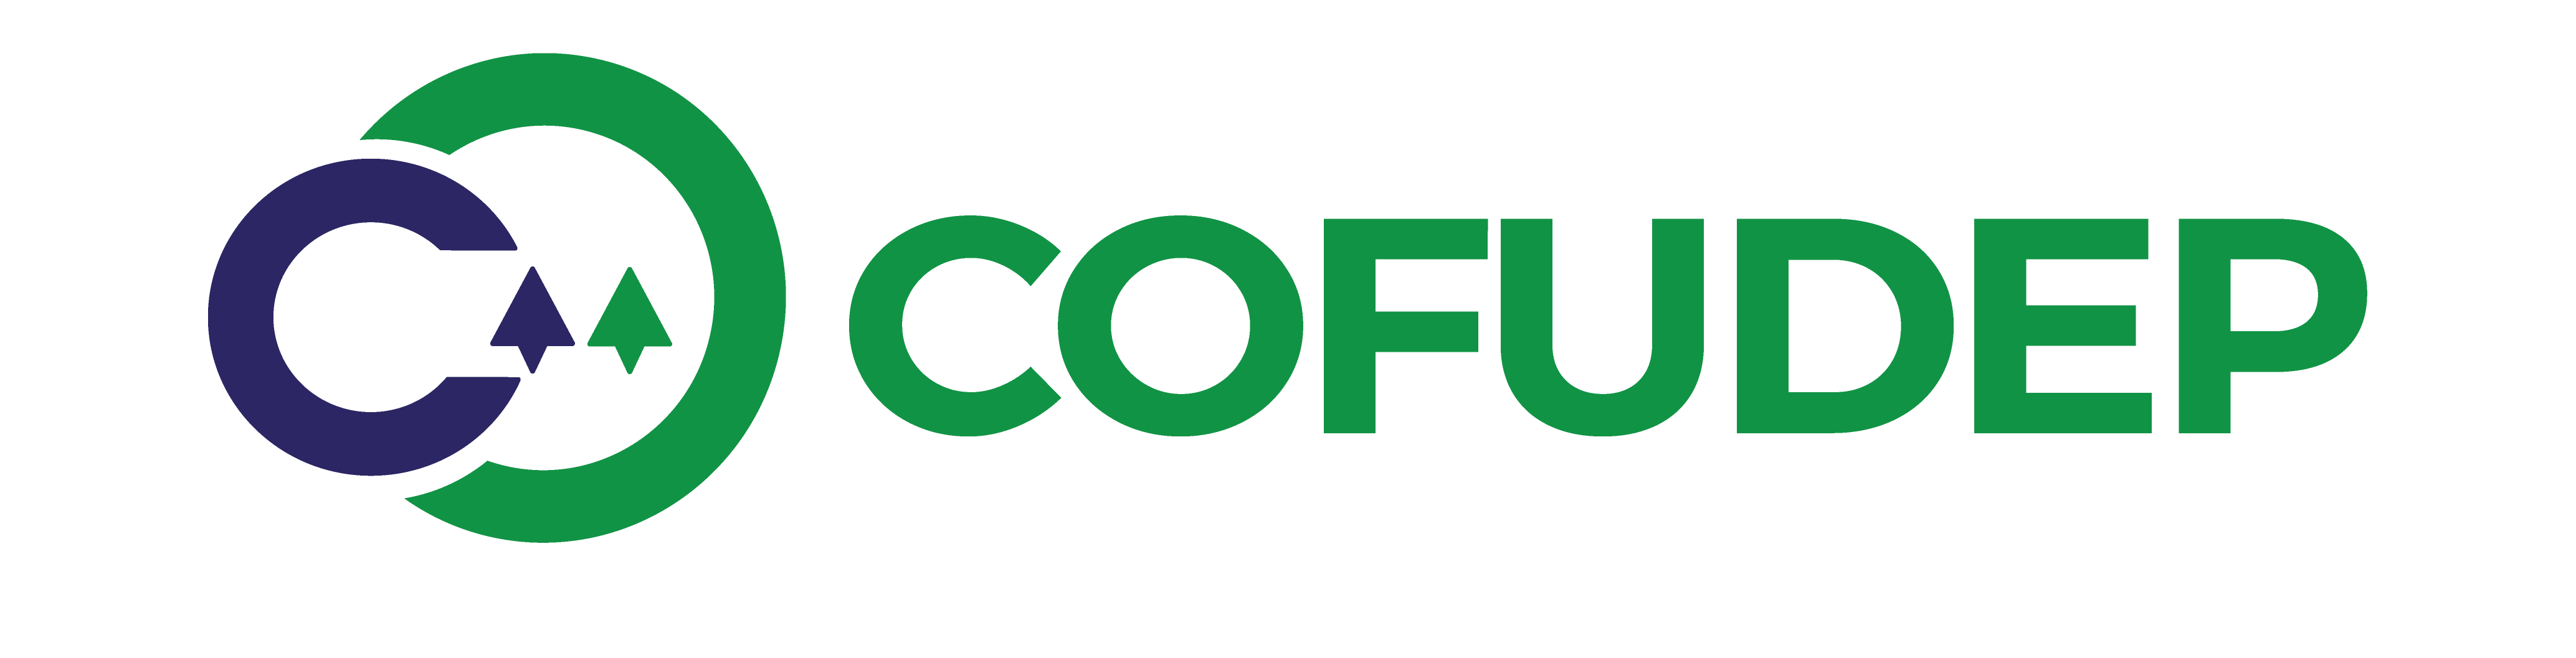 Cofudep Logo